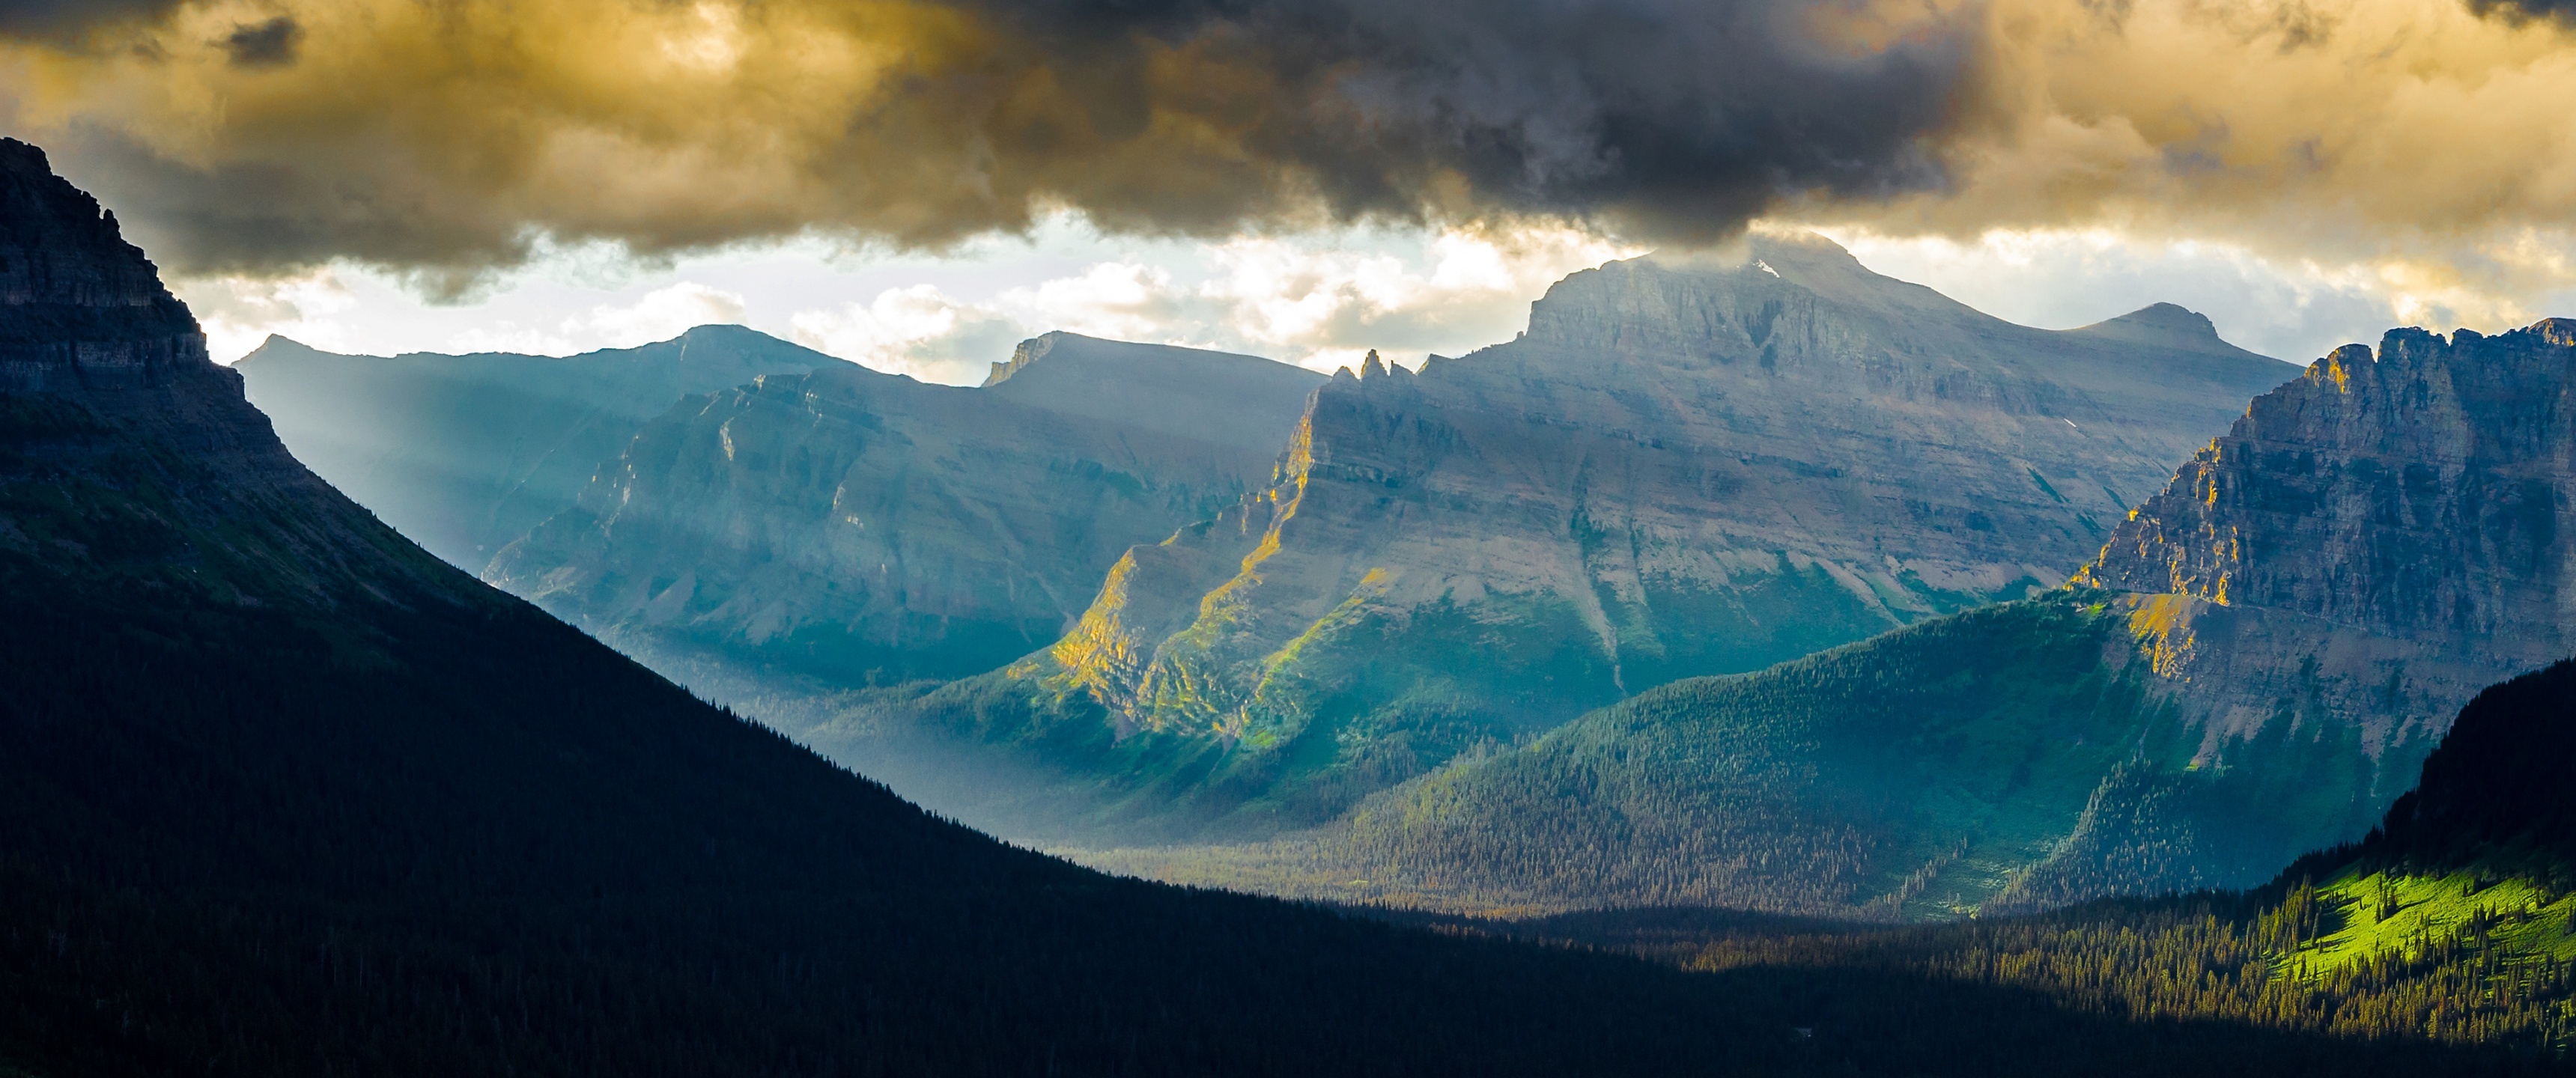 Logan Pass wallpaper, Glacier National Park Montana, Early morning nature, 4K, 3440x1440 Dual Screen Desktop